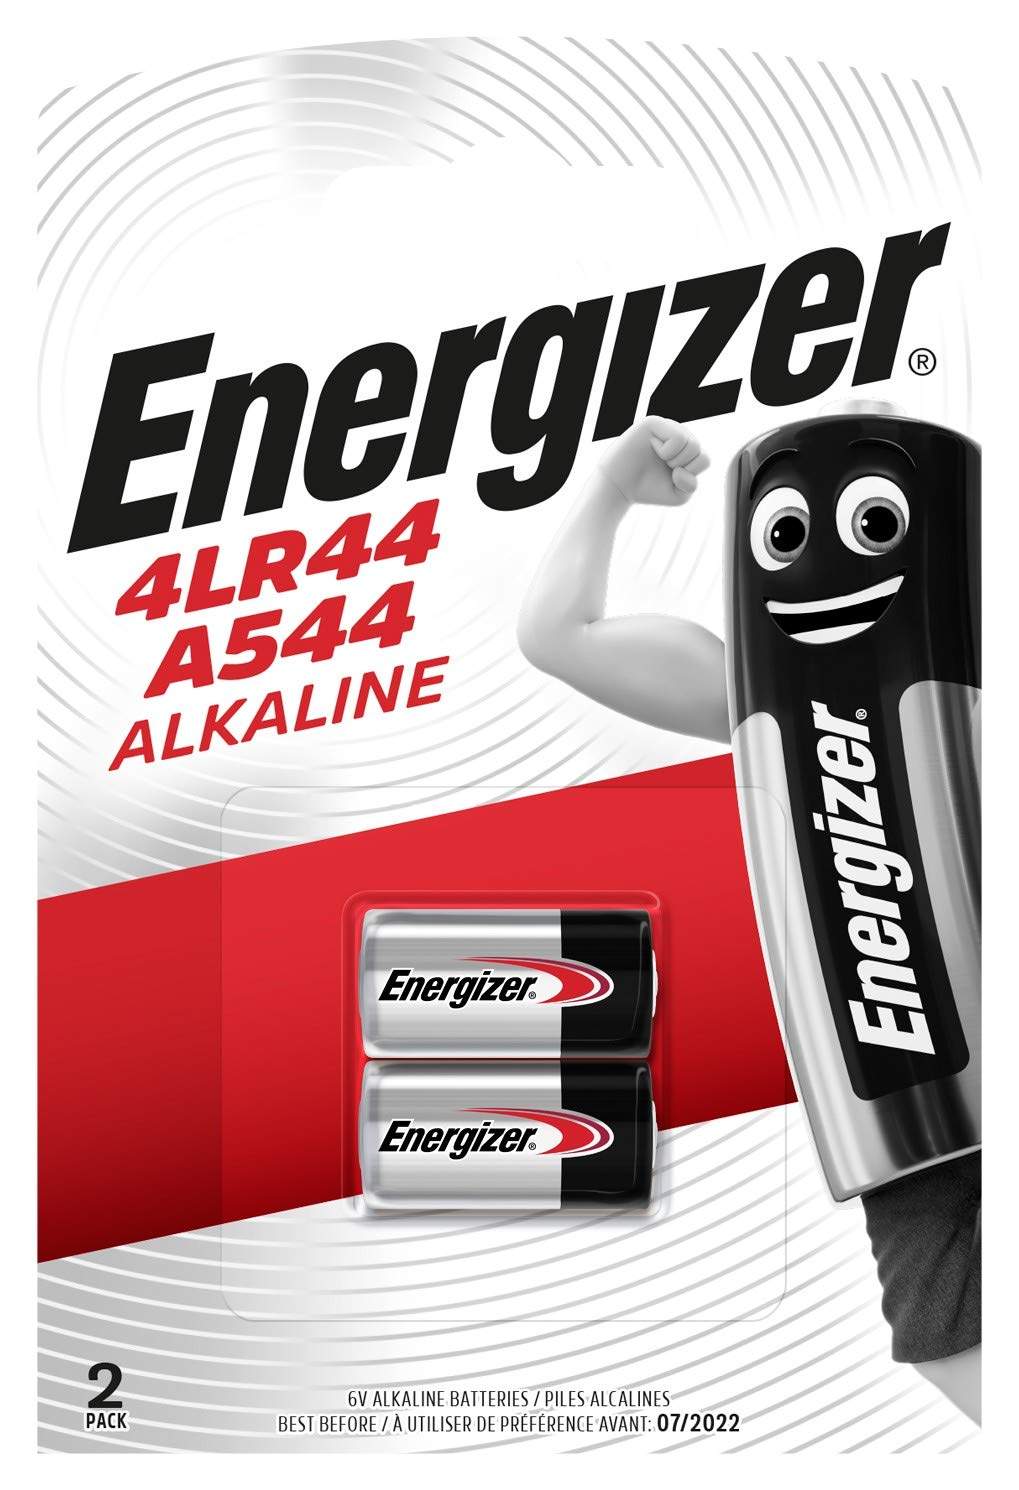 Energizer Speciale Alcaline 6V 4LR44/A544 par 2